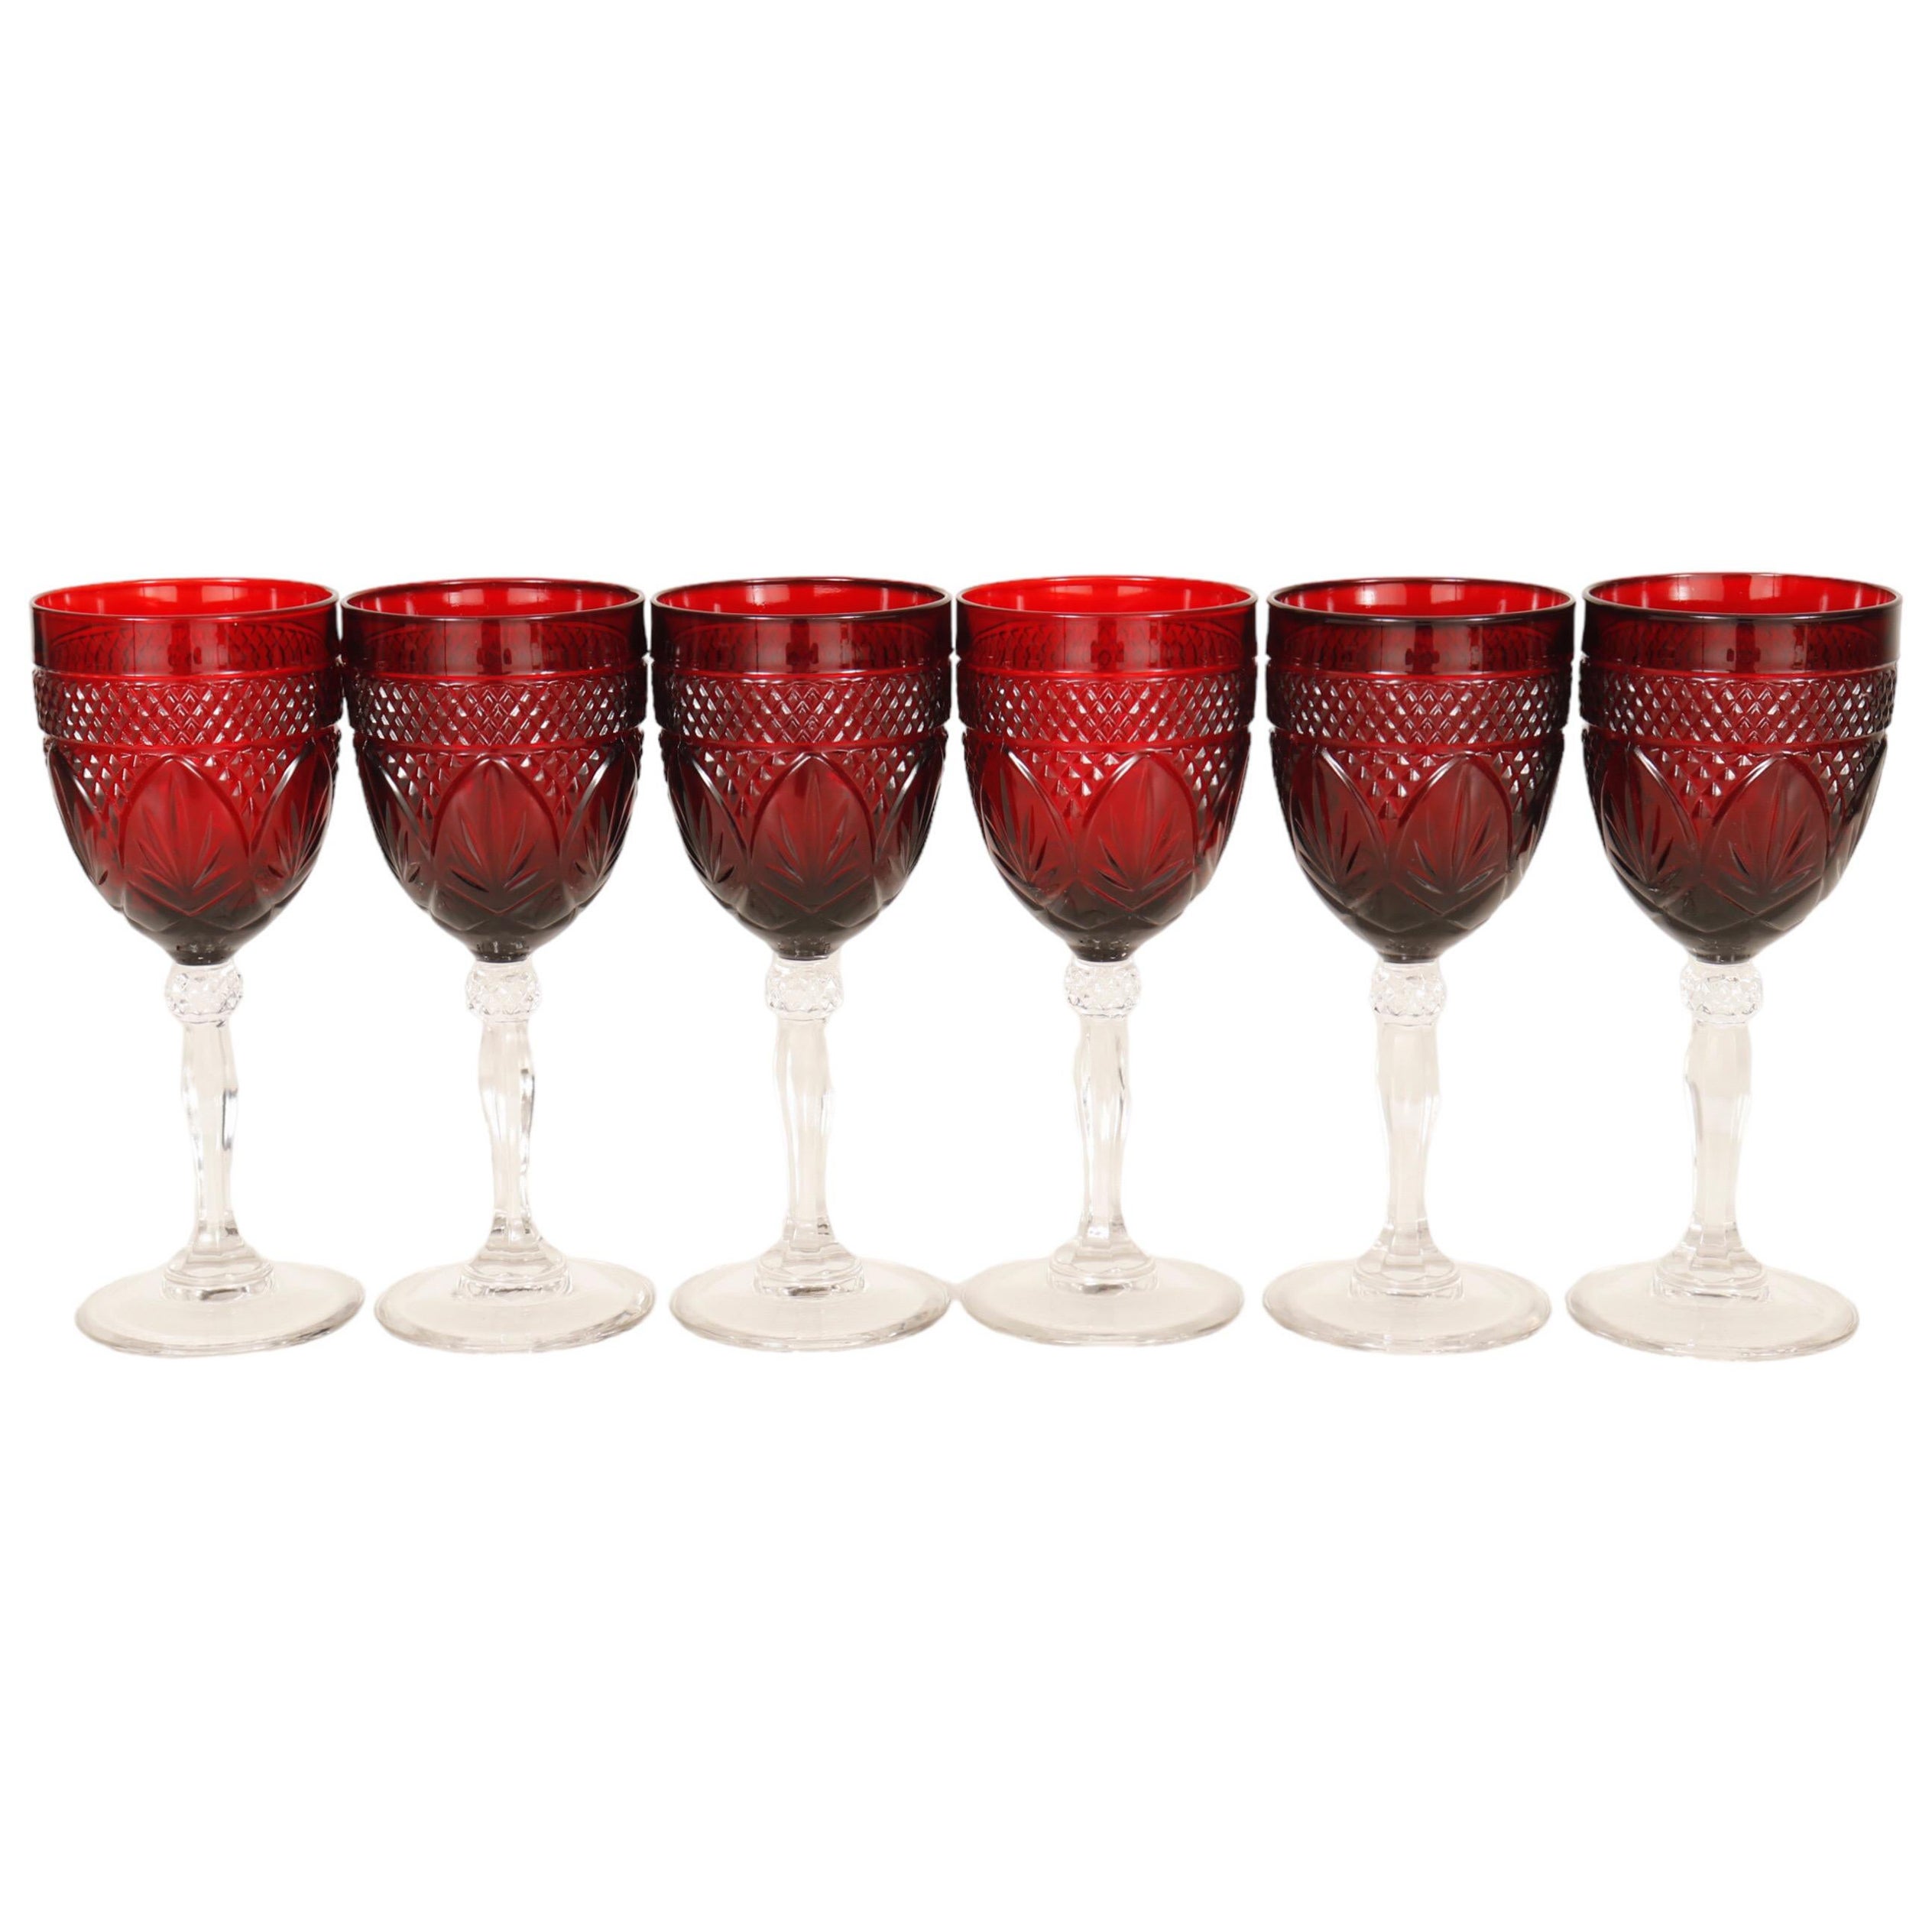 Cristal D'Arques Ruby Wine Glasses - Set of 6